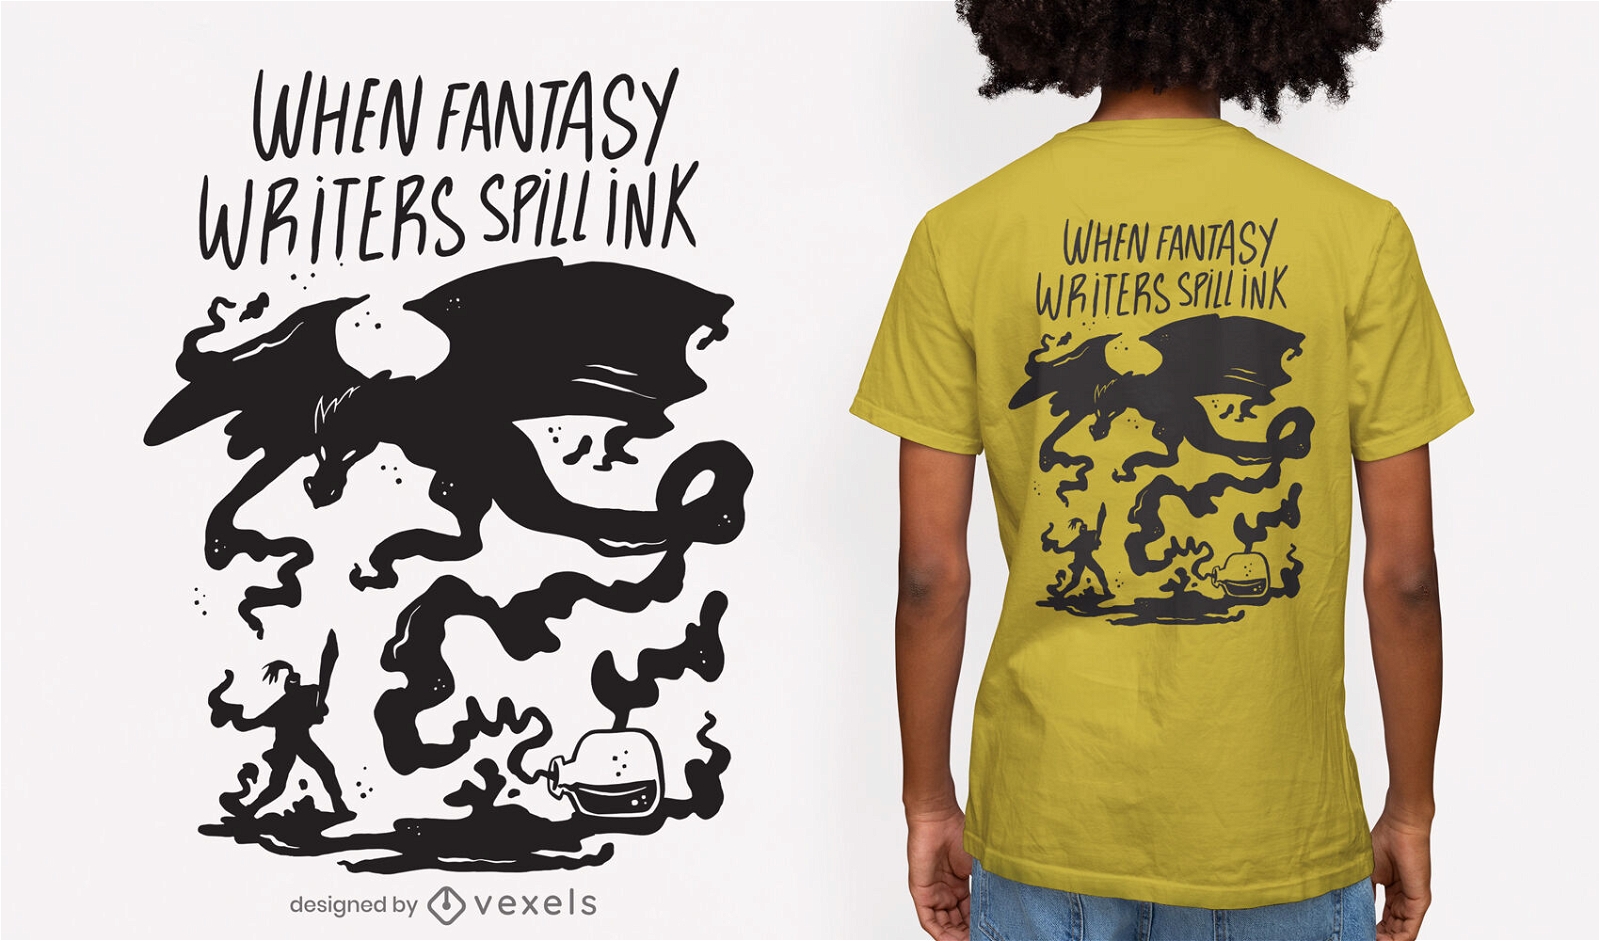 Fantasy writers ink t-shirt design